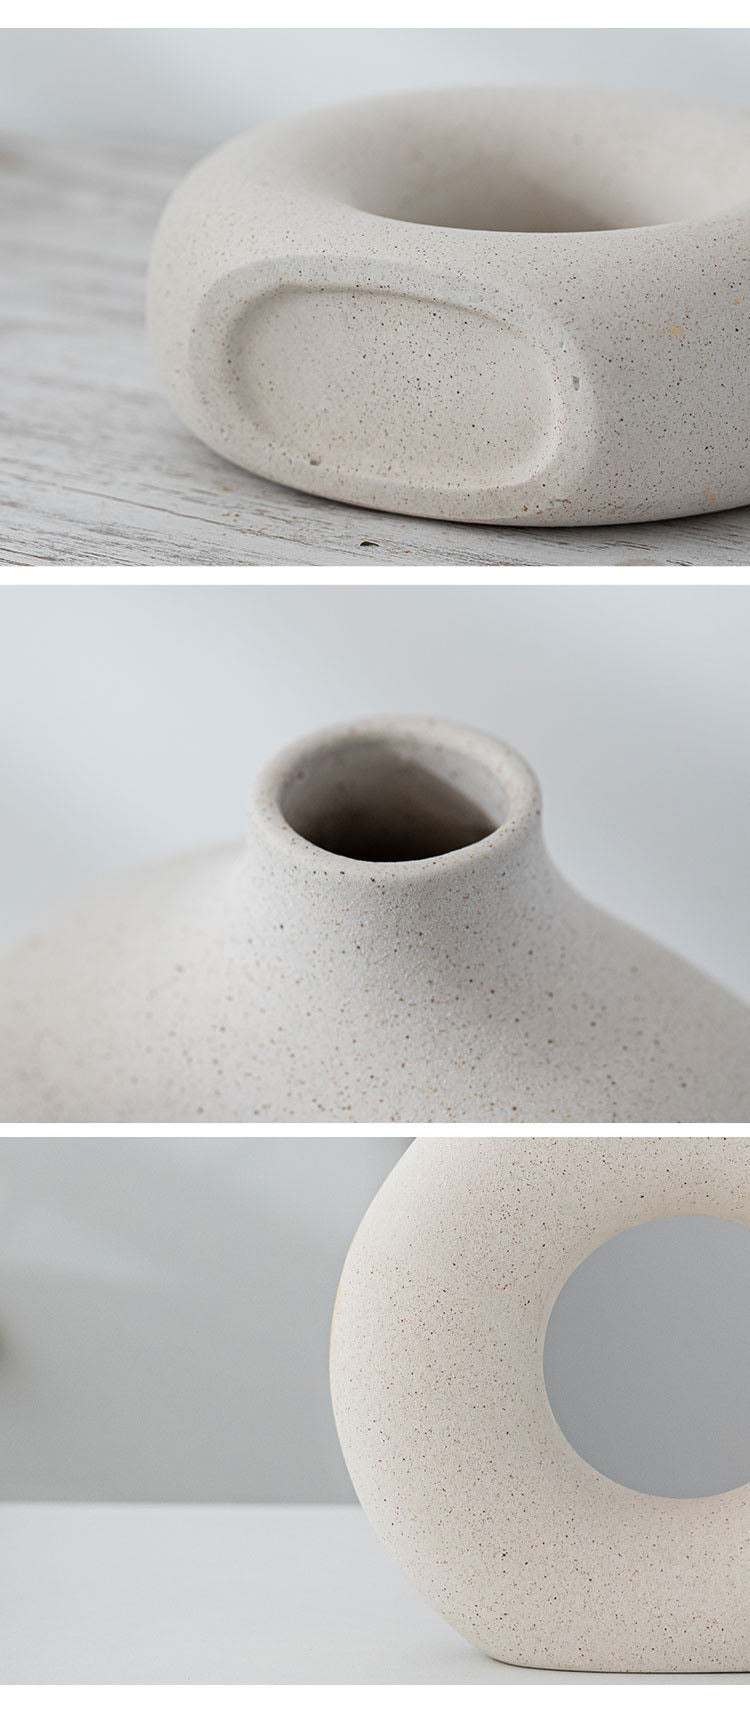 Halo Vase - Nordic Donut Flower Pot